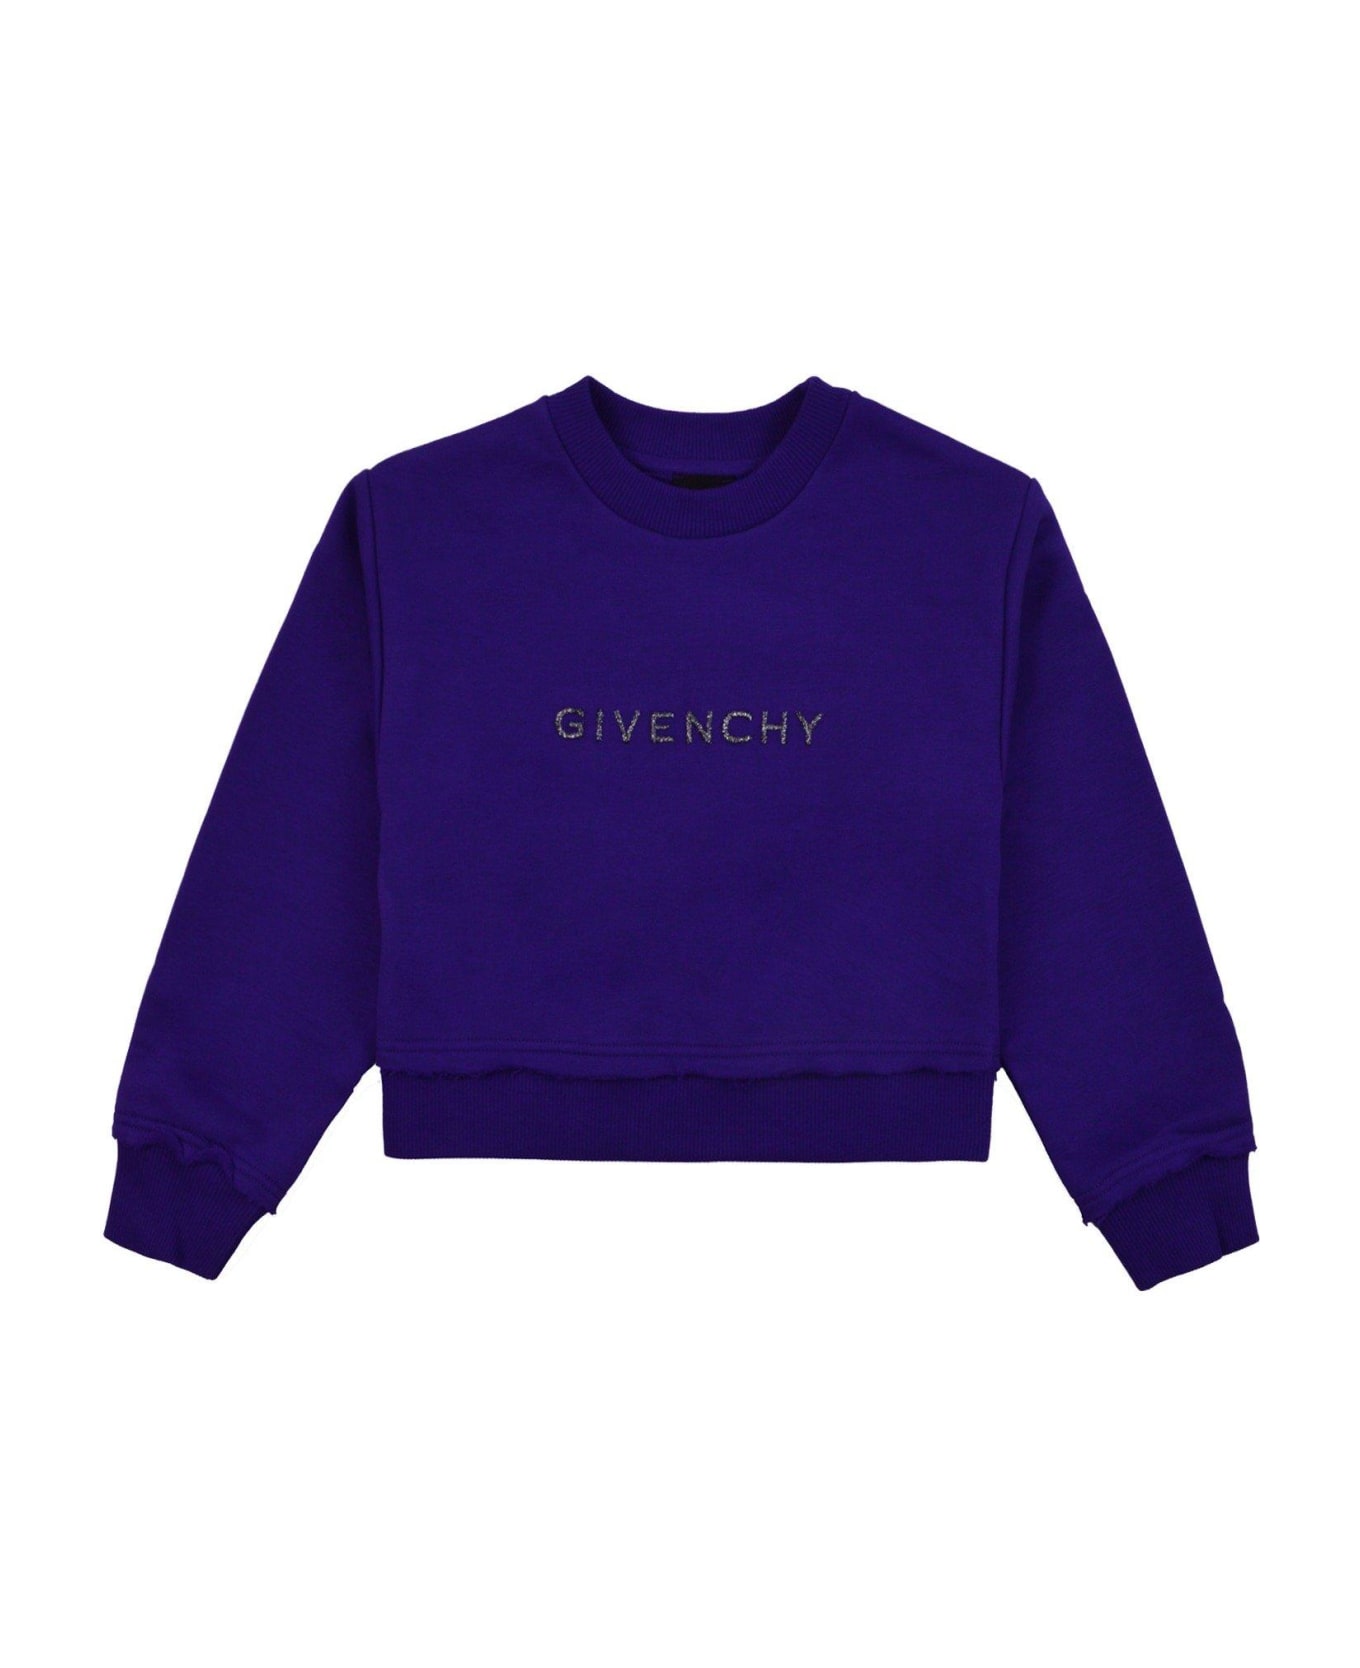 Givenchy Logo Embroidered Crewneck Sweatshirt - C Violetto